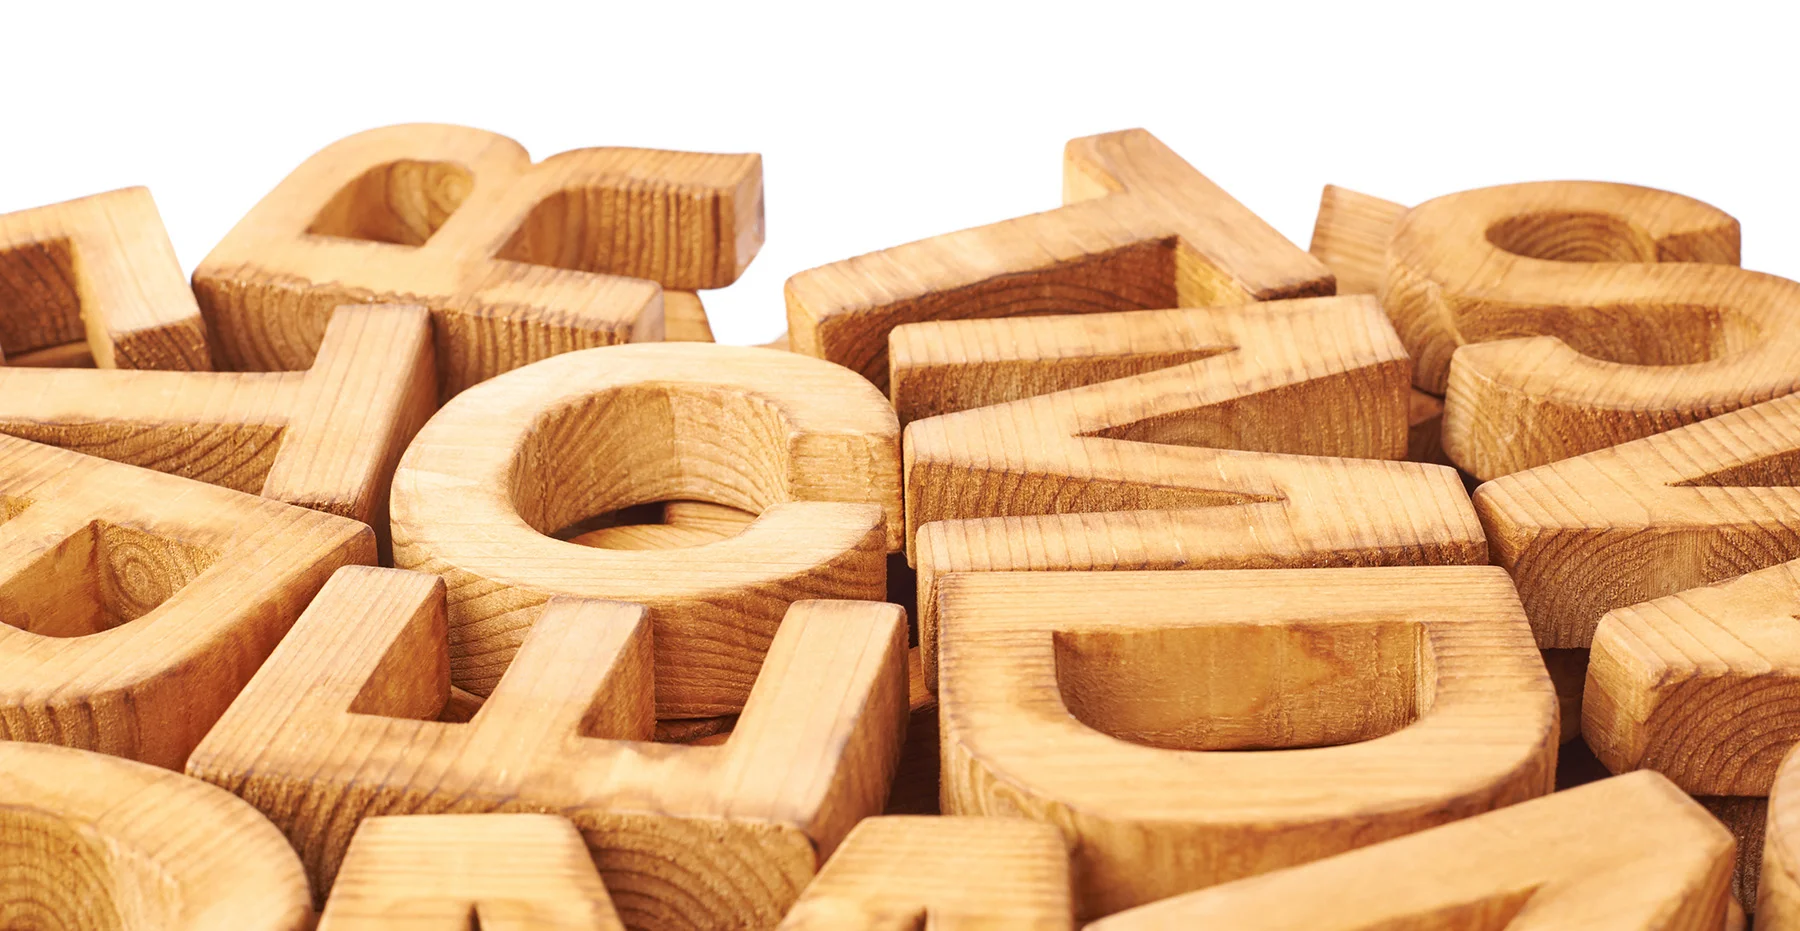 Piles of letter blocks in the Norwegian language